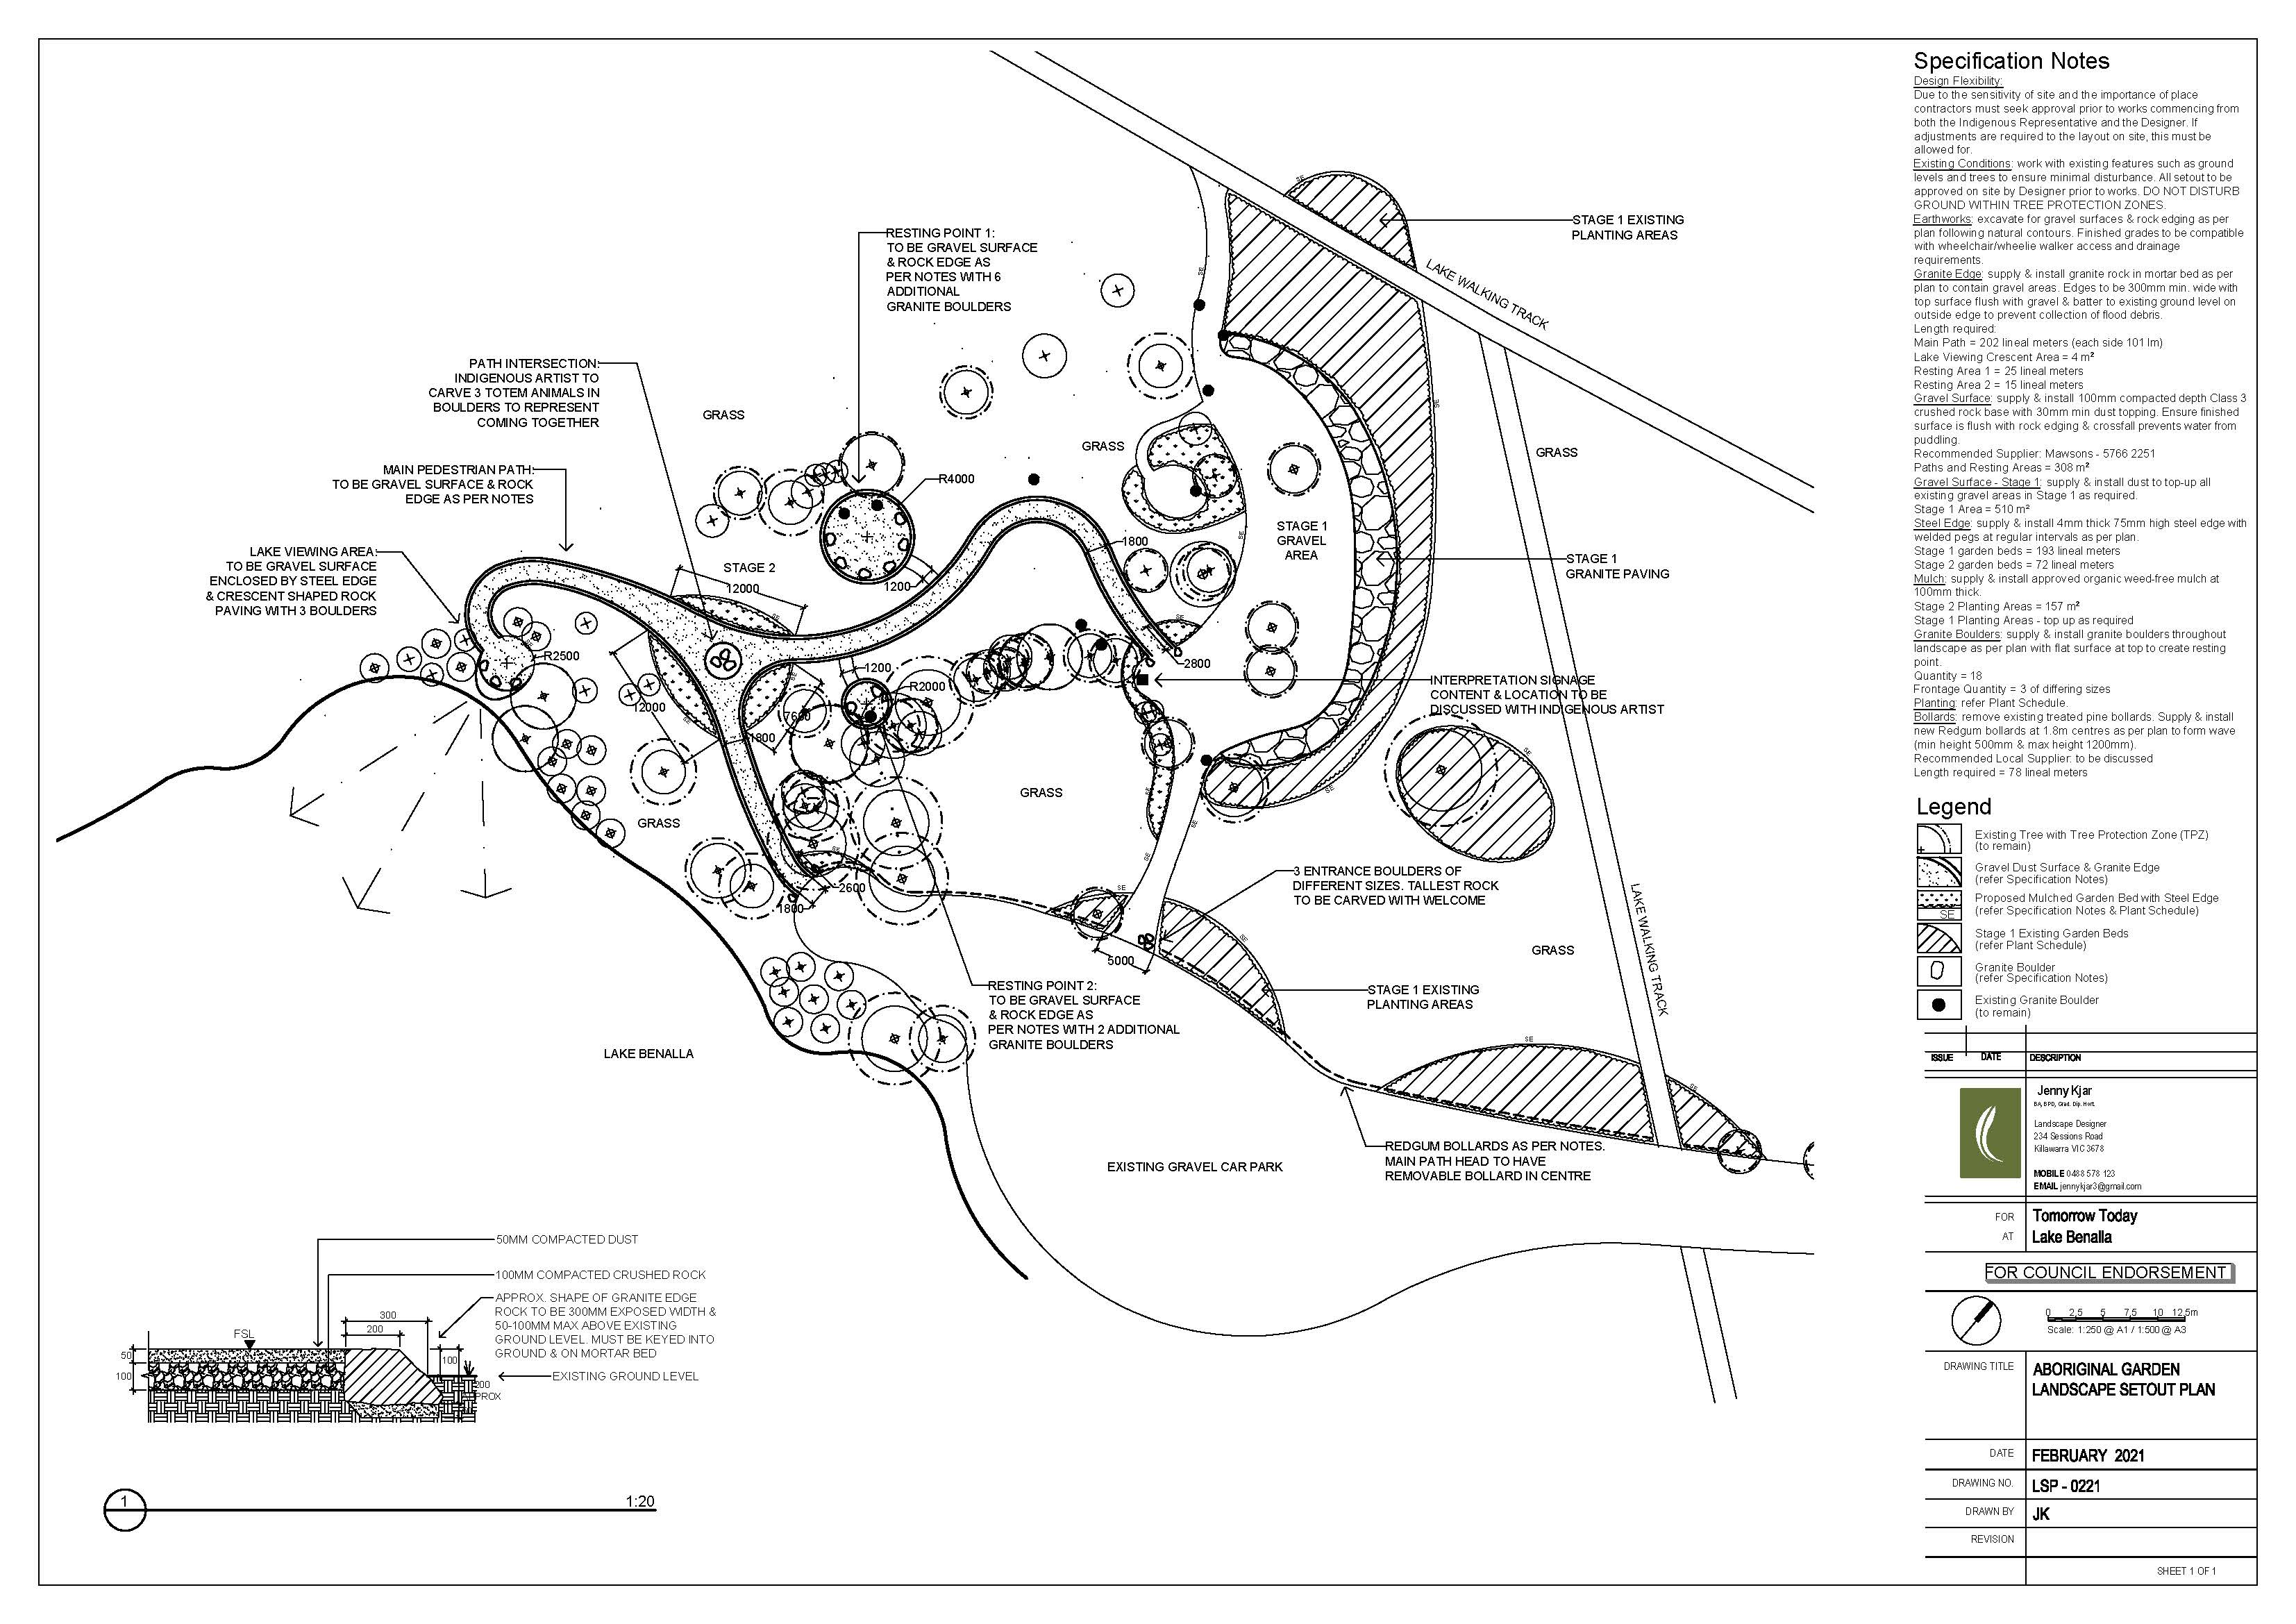 Aboriginal Garden Landscape Setout Plan.jpg